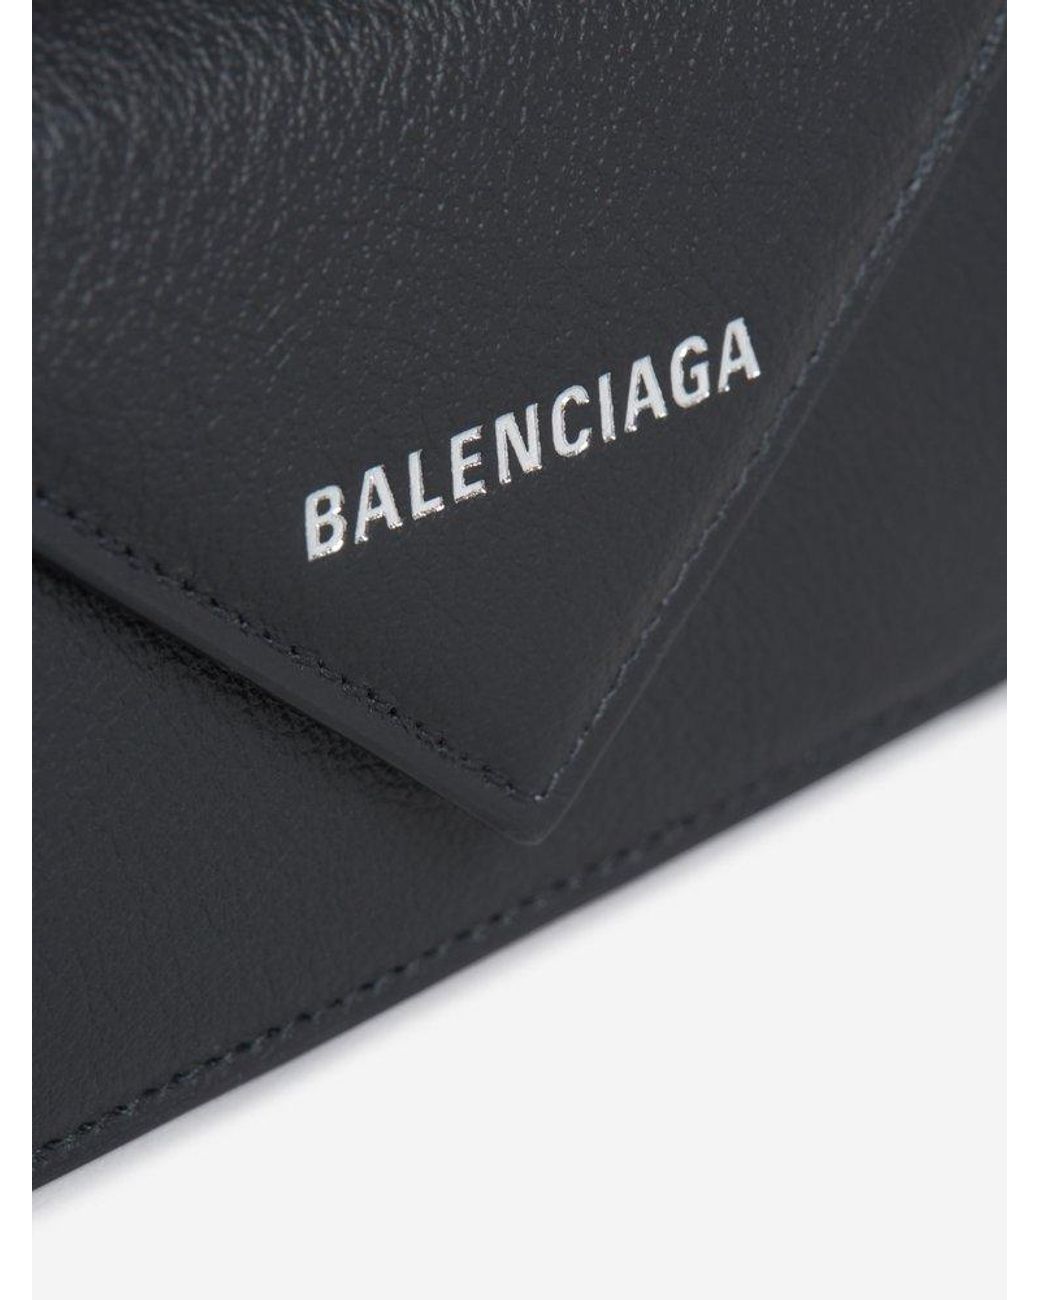 Balenciaga Leather Papier Mini Wallet in Black | Lyst